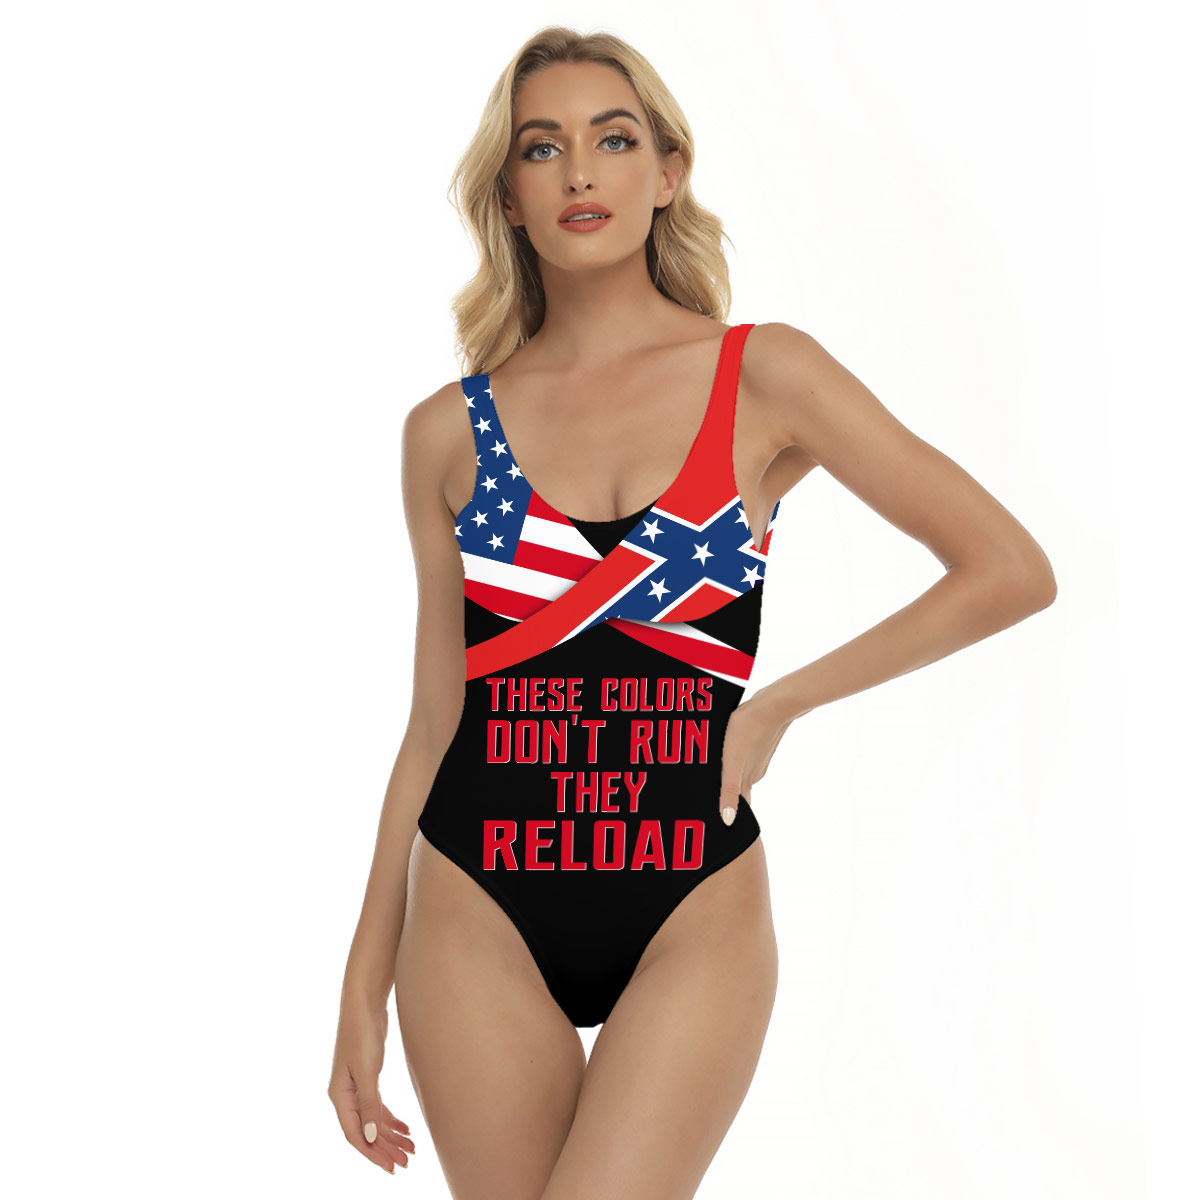 Confederate Flag Bikini Rebel Bathing Suit Swimsuit QFAA280702